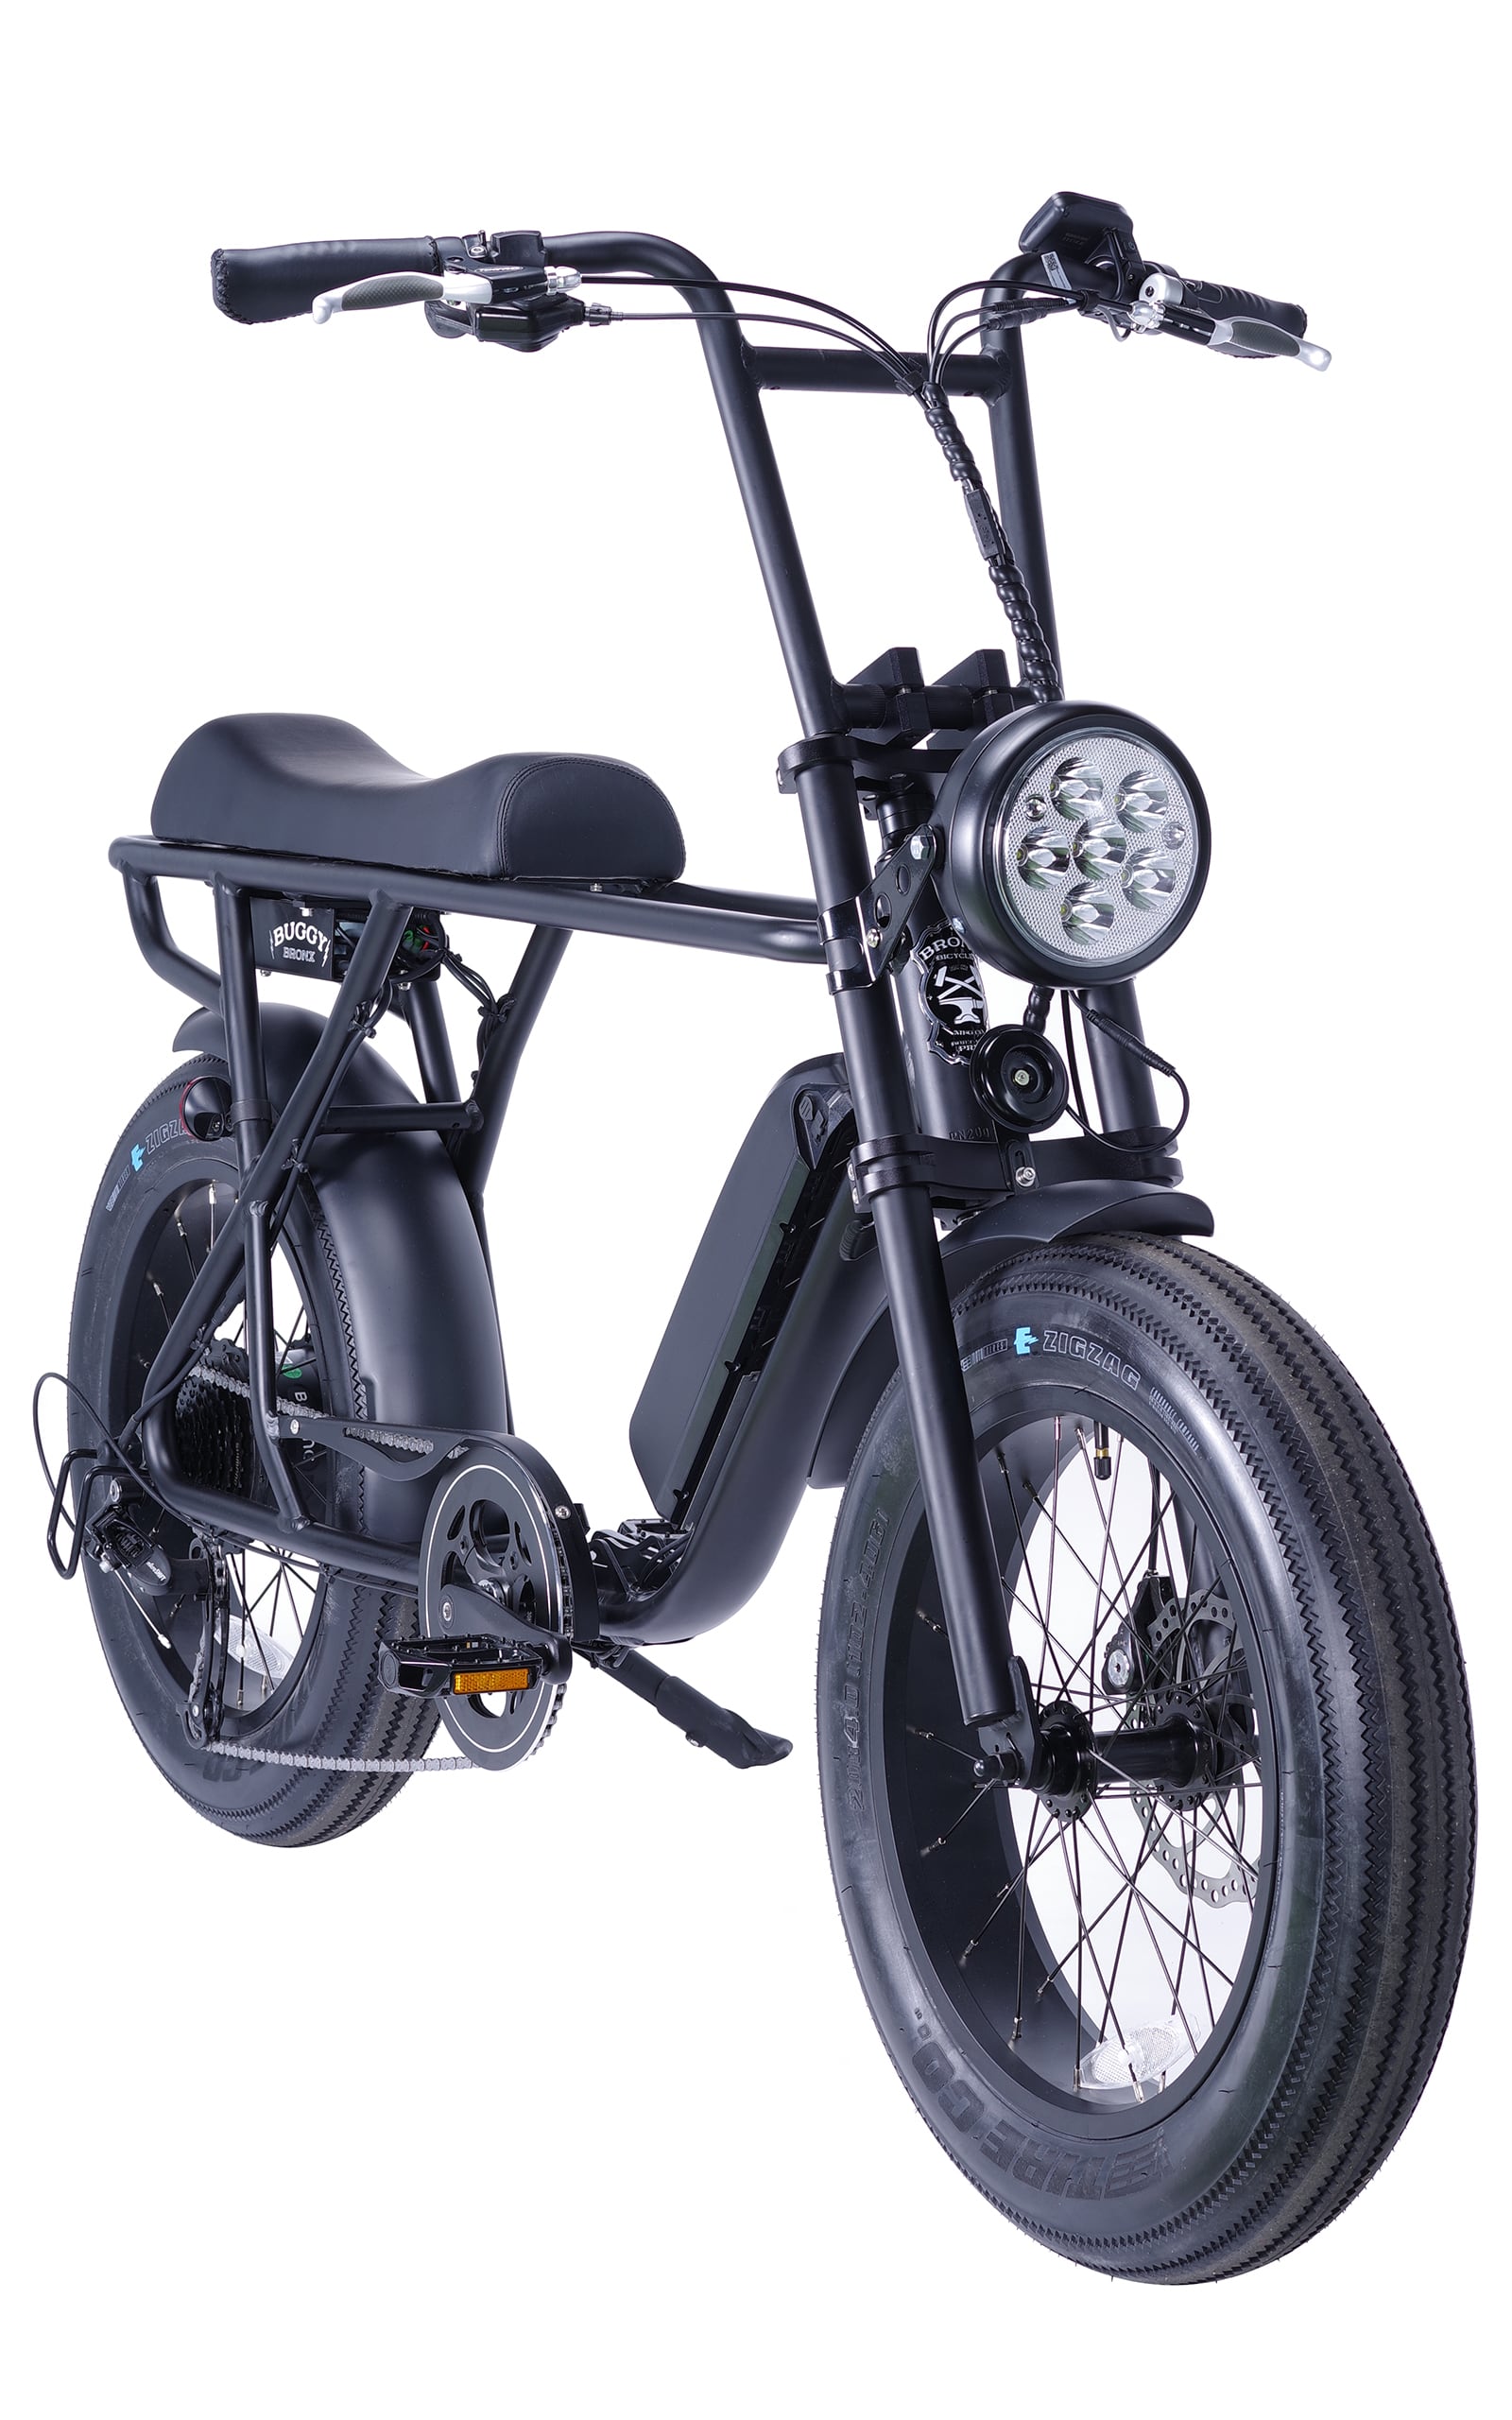 BRONX BUGGY | 全てが新しいBRONXの電動自転車ブロンクスバギー